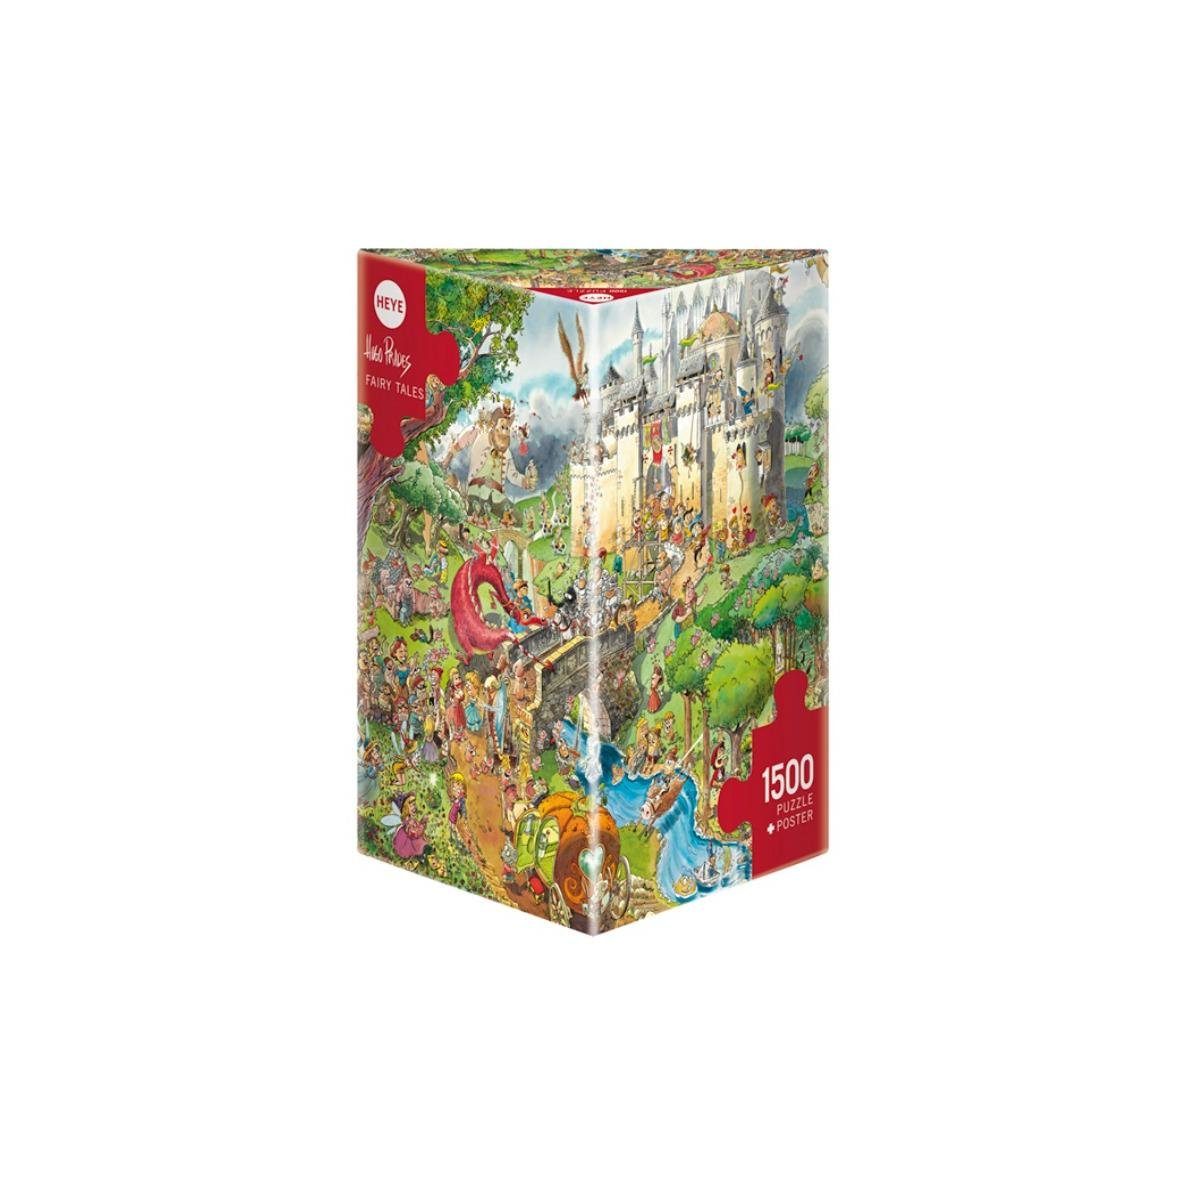 HEYE Puzzle 294144 - Fairy Tales, Cartoon im Dreieck, 1500 Teile -..., 1500 Puzzleteile